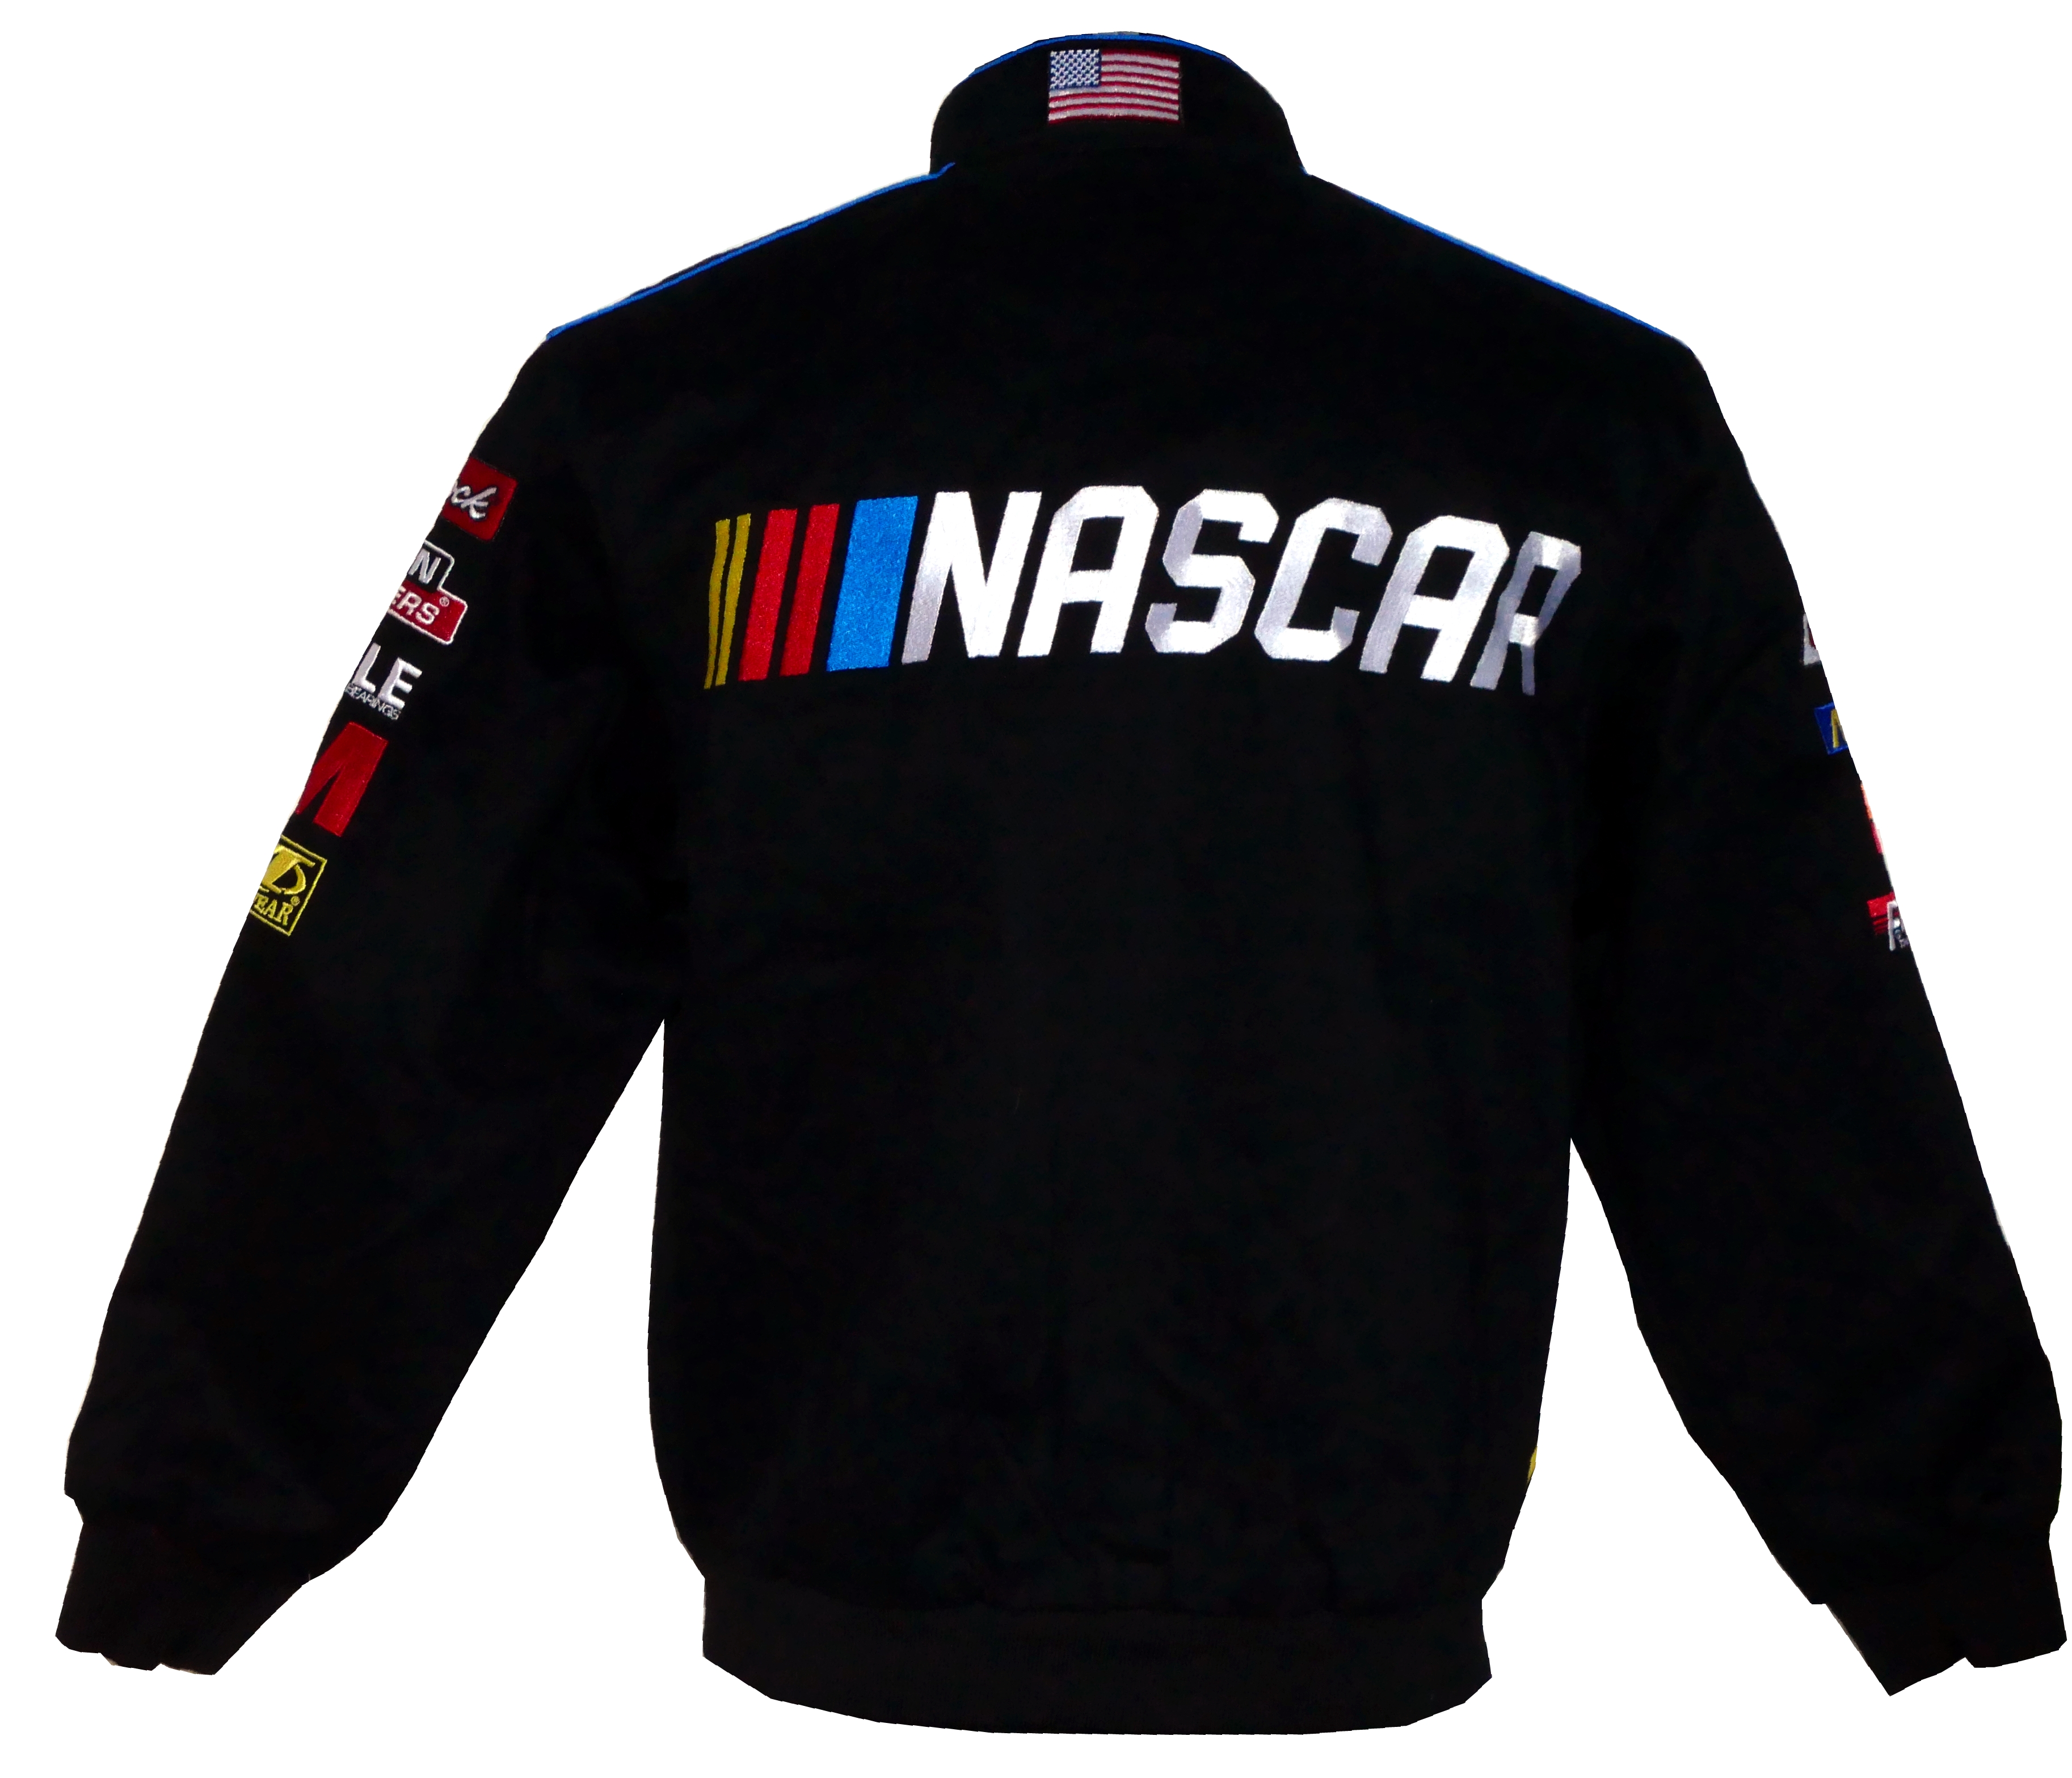 NASCAR jacket - Officially licensed US-Car and NASCAR fashion